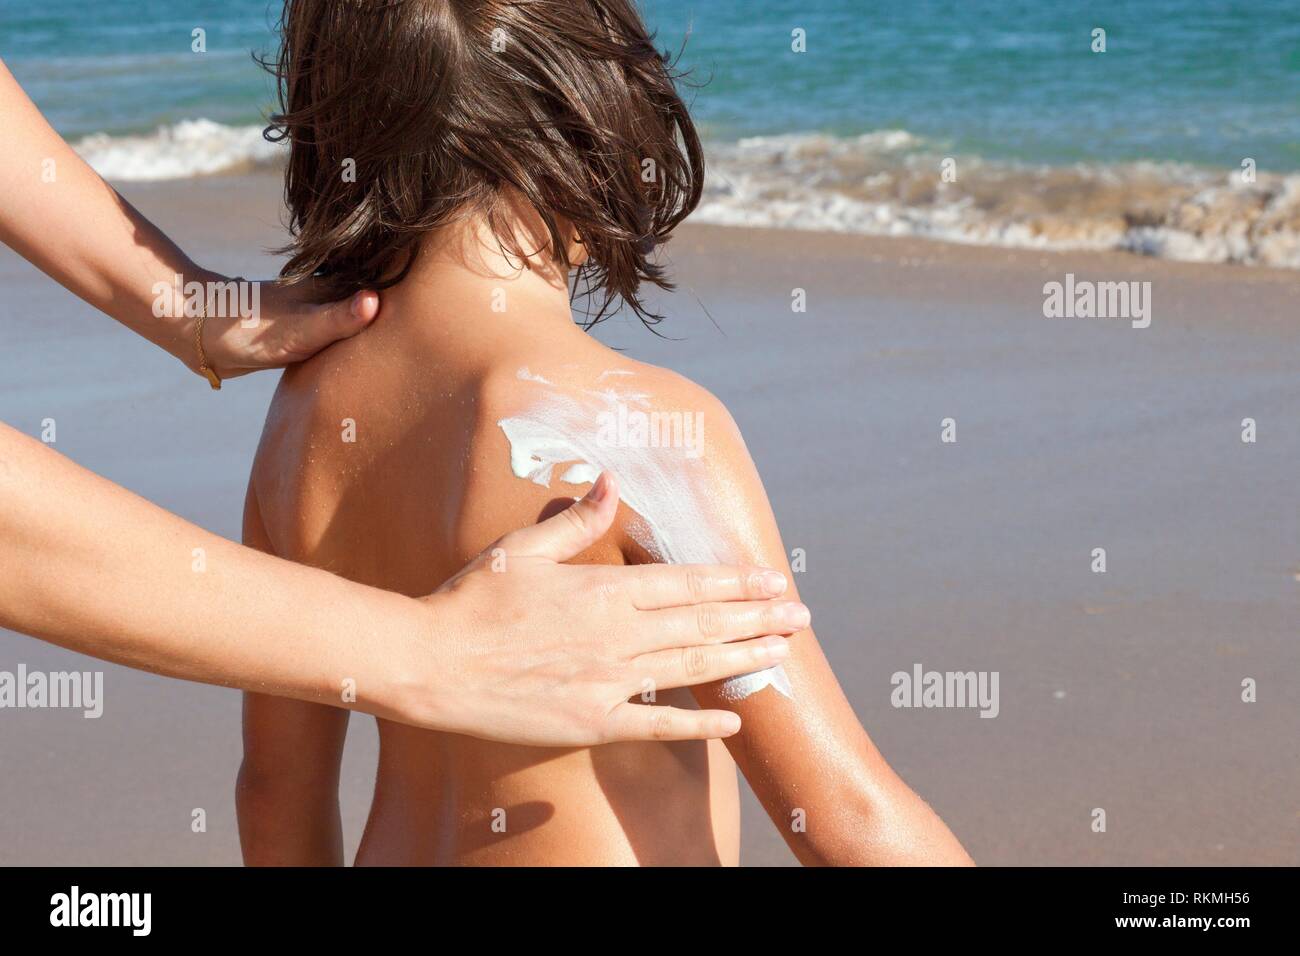 Mother applying sunblock cream to her daughter on arm. Idyllic beach background. Stock Photo